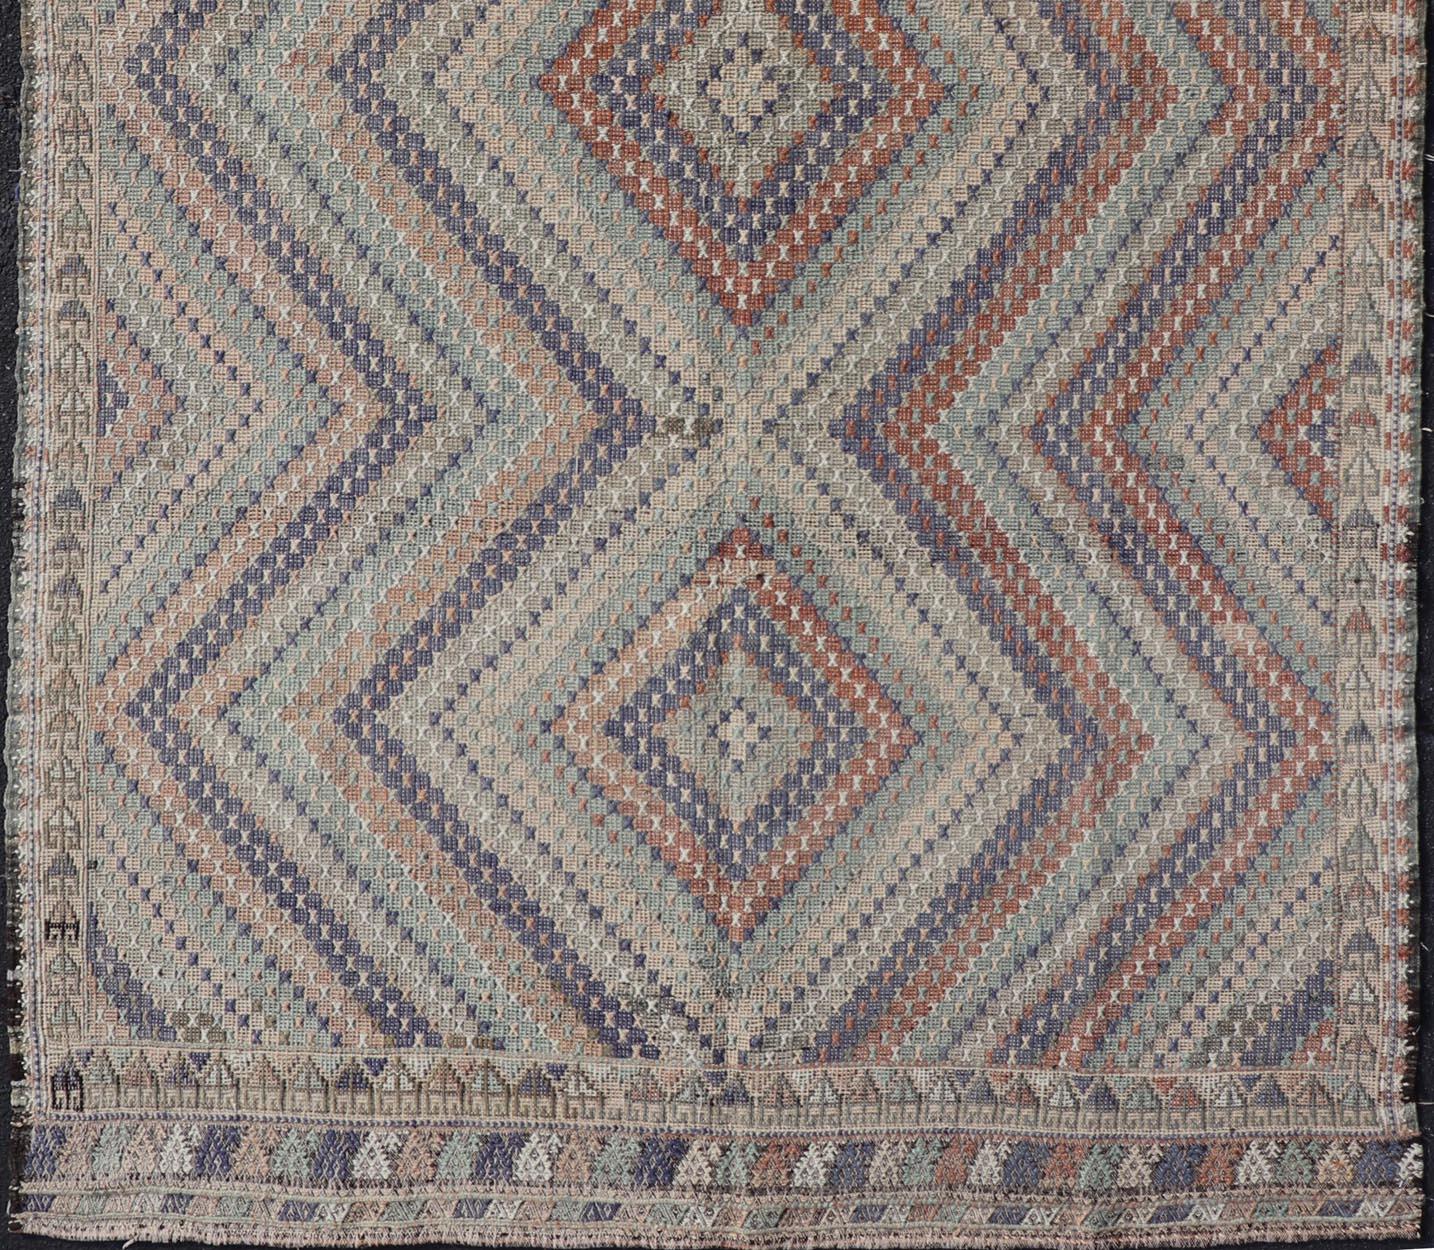 Vintage Turkish Hand Woven Embroidered Kilim Rug with Diamond Design For Sale 2